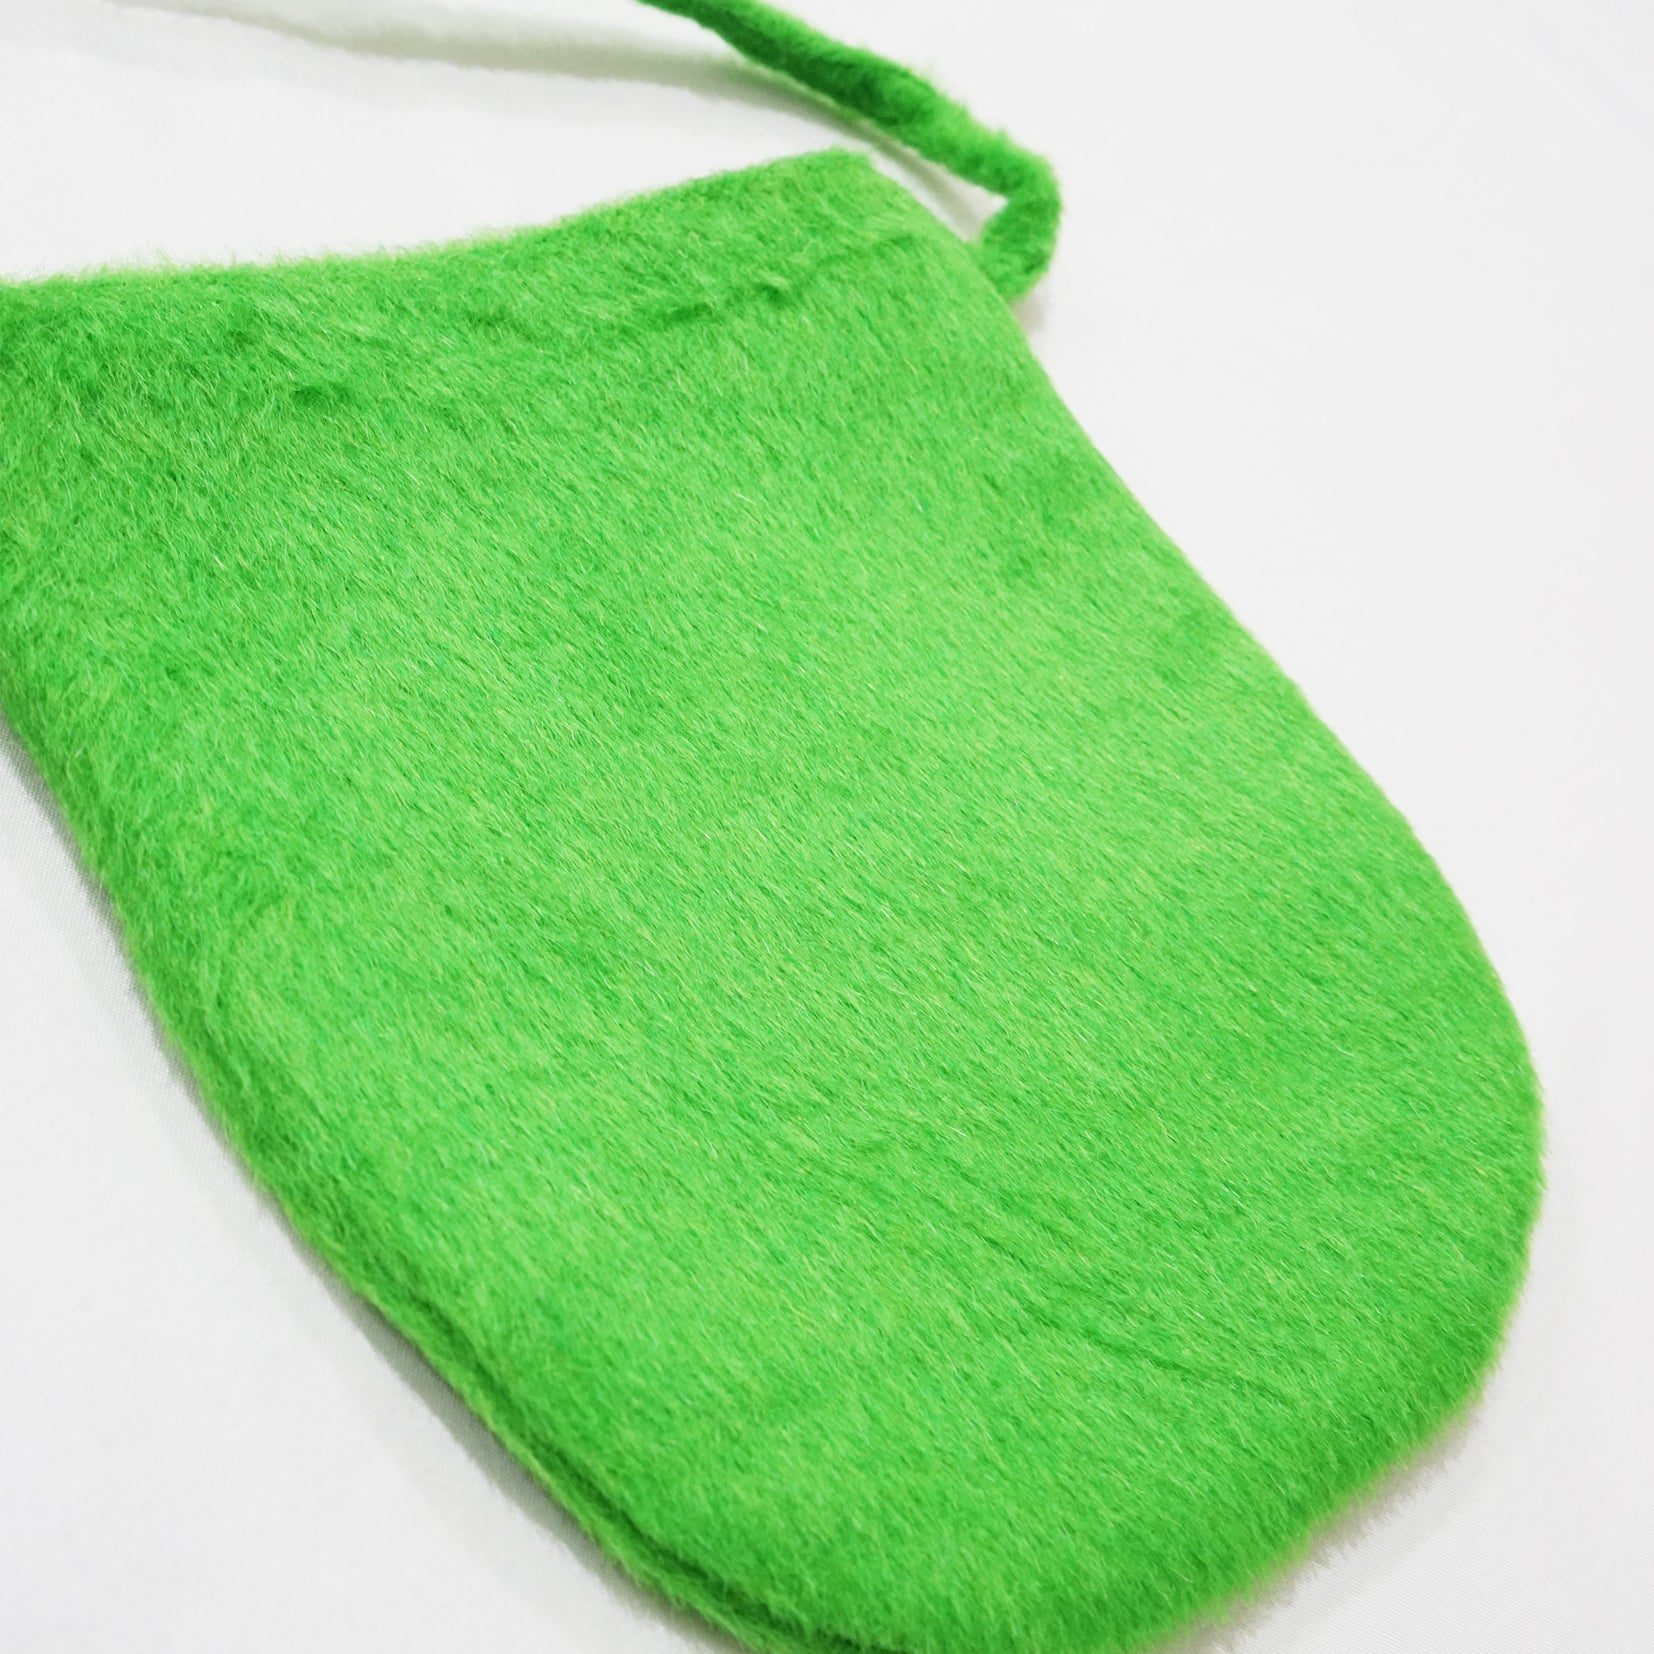 Wool crossbody bag in bright green